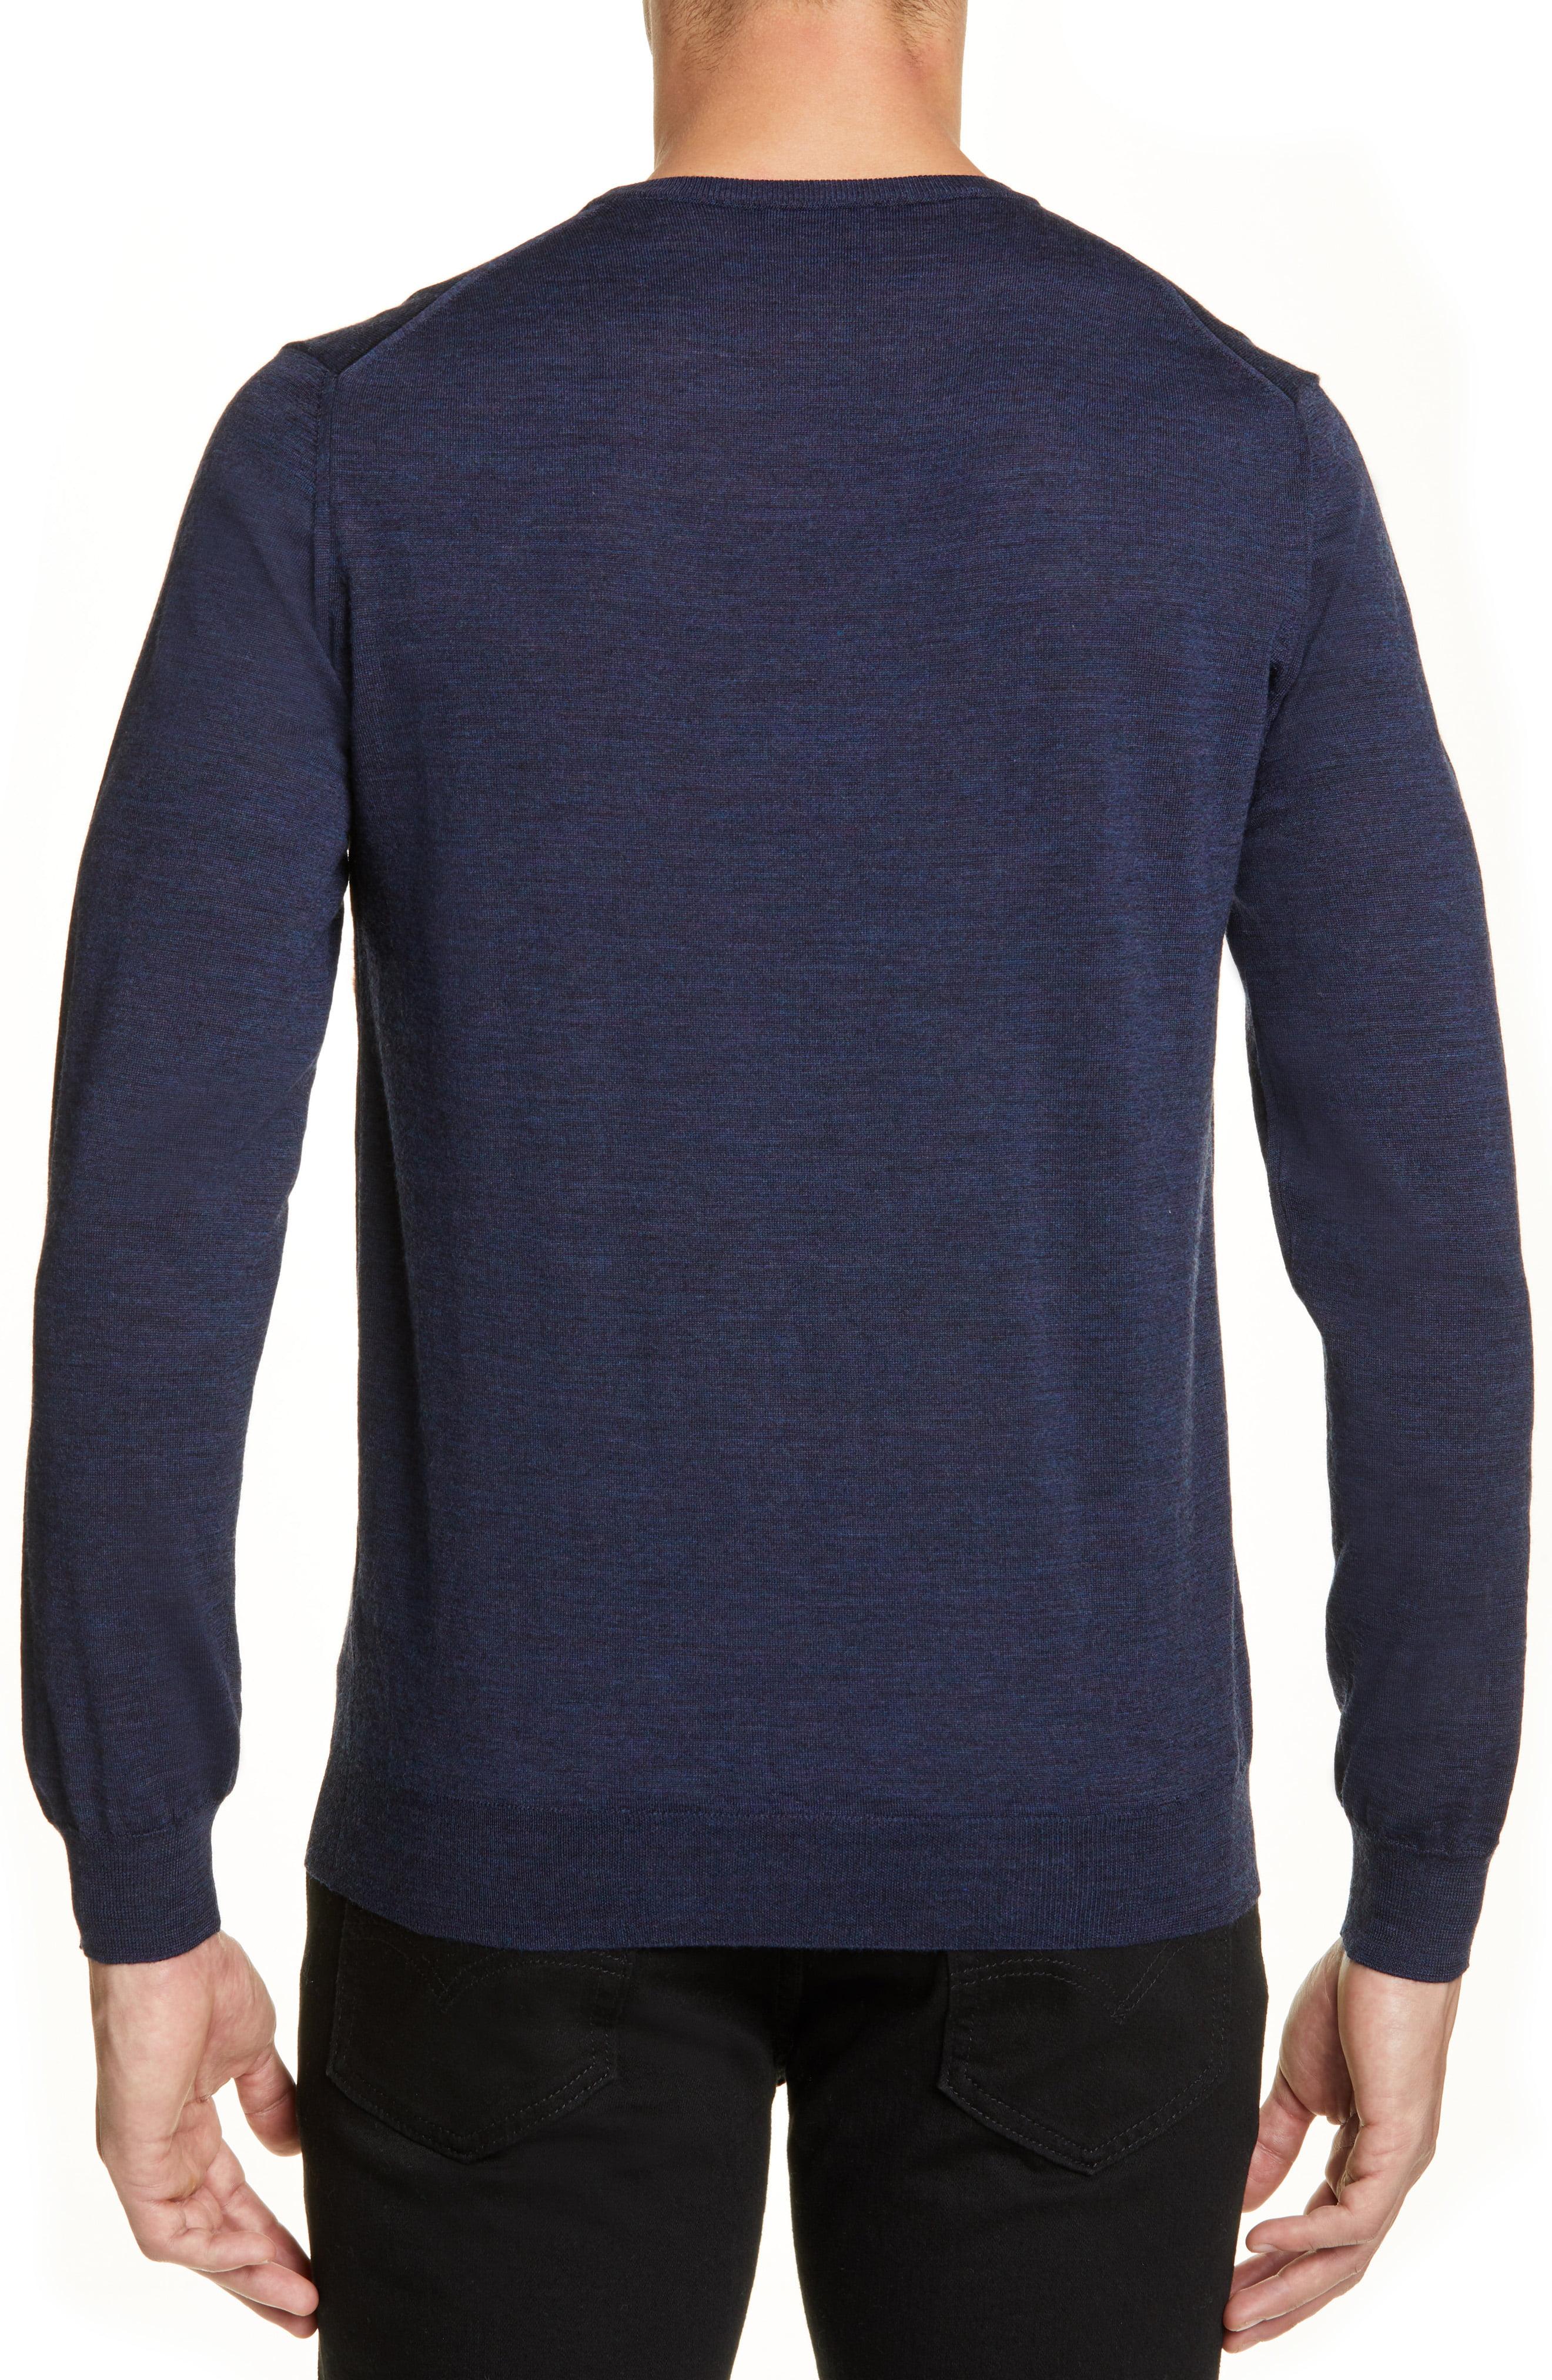 Lyst - Lanvin Wool Crewneck Sweater in Blue for Men